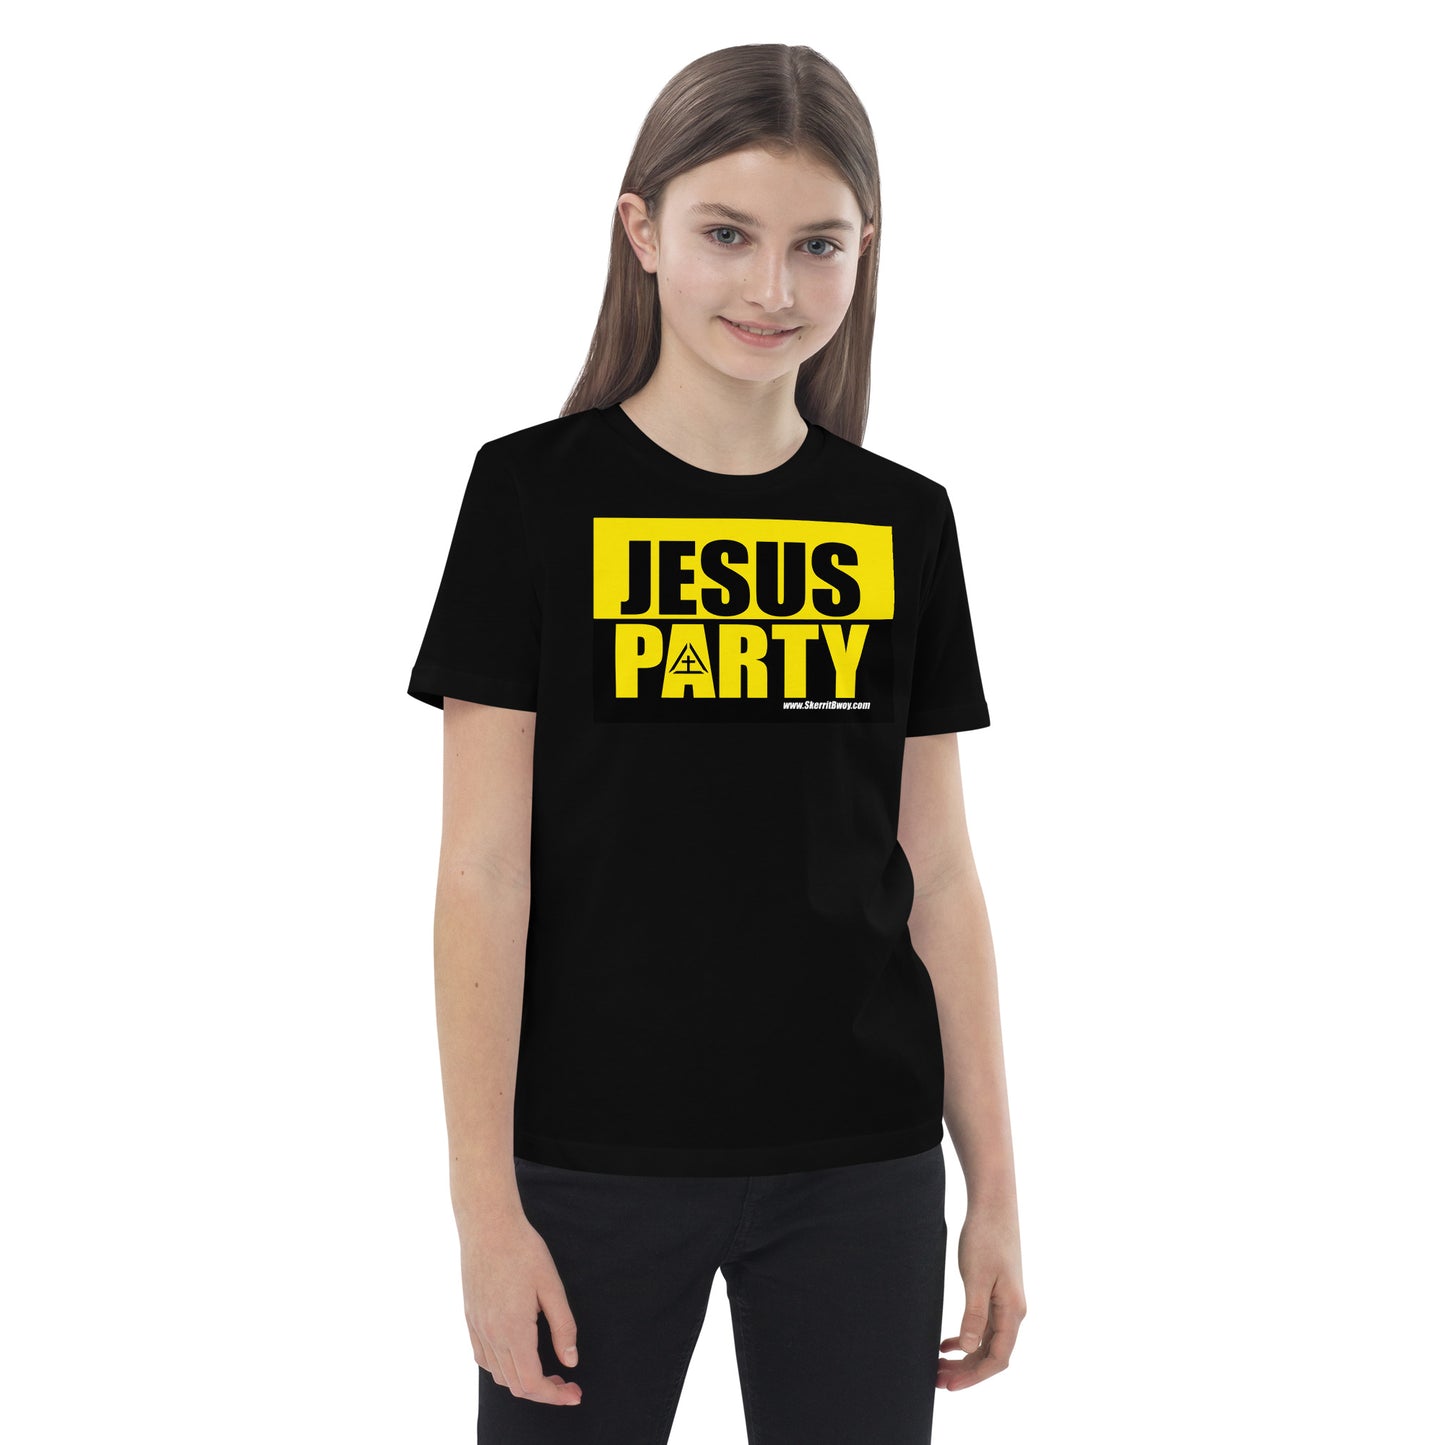 Jesus Party - Youth - Organic cotton kids t-shirt